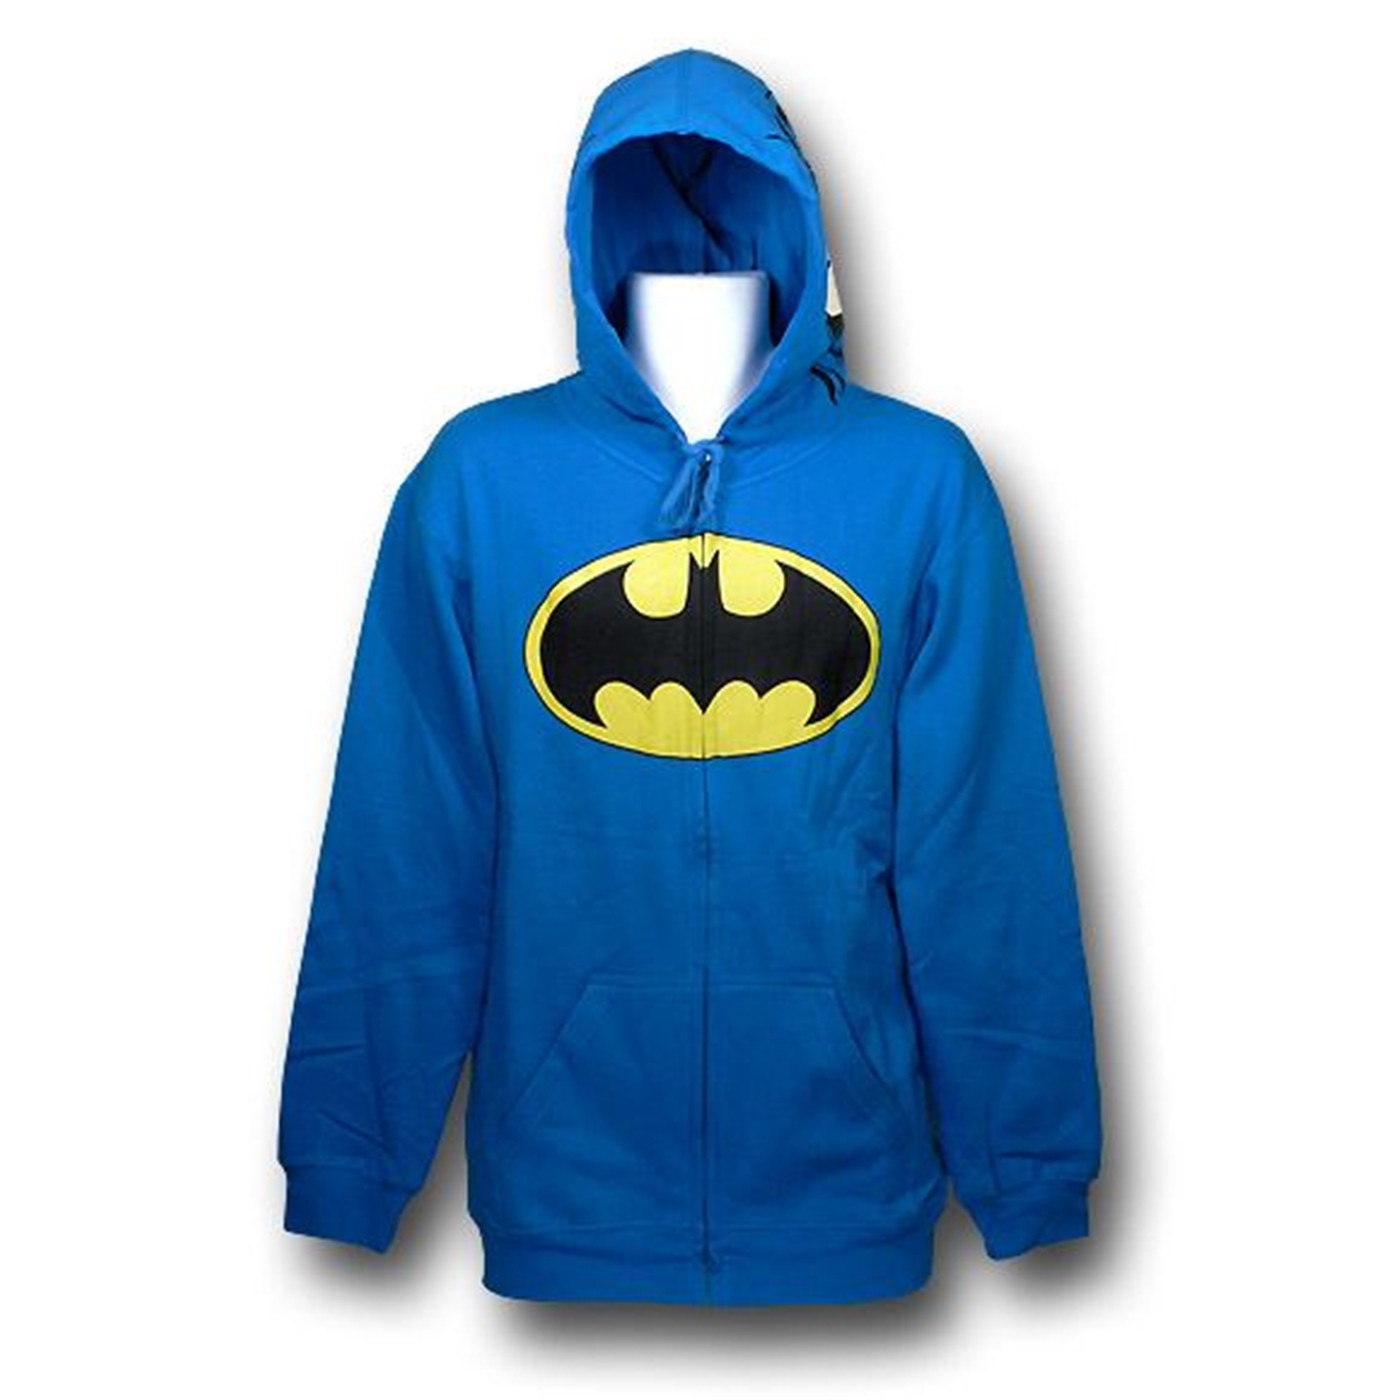 Batman Costume Sideward Glance Zip-Up Hoodie